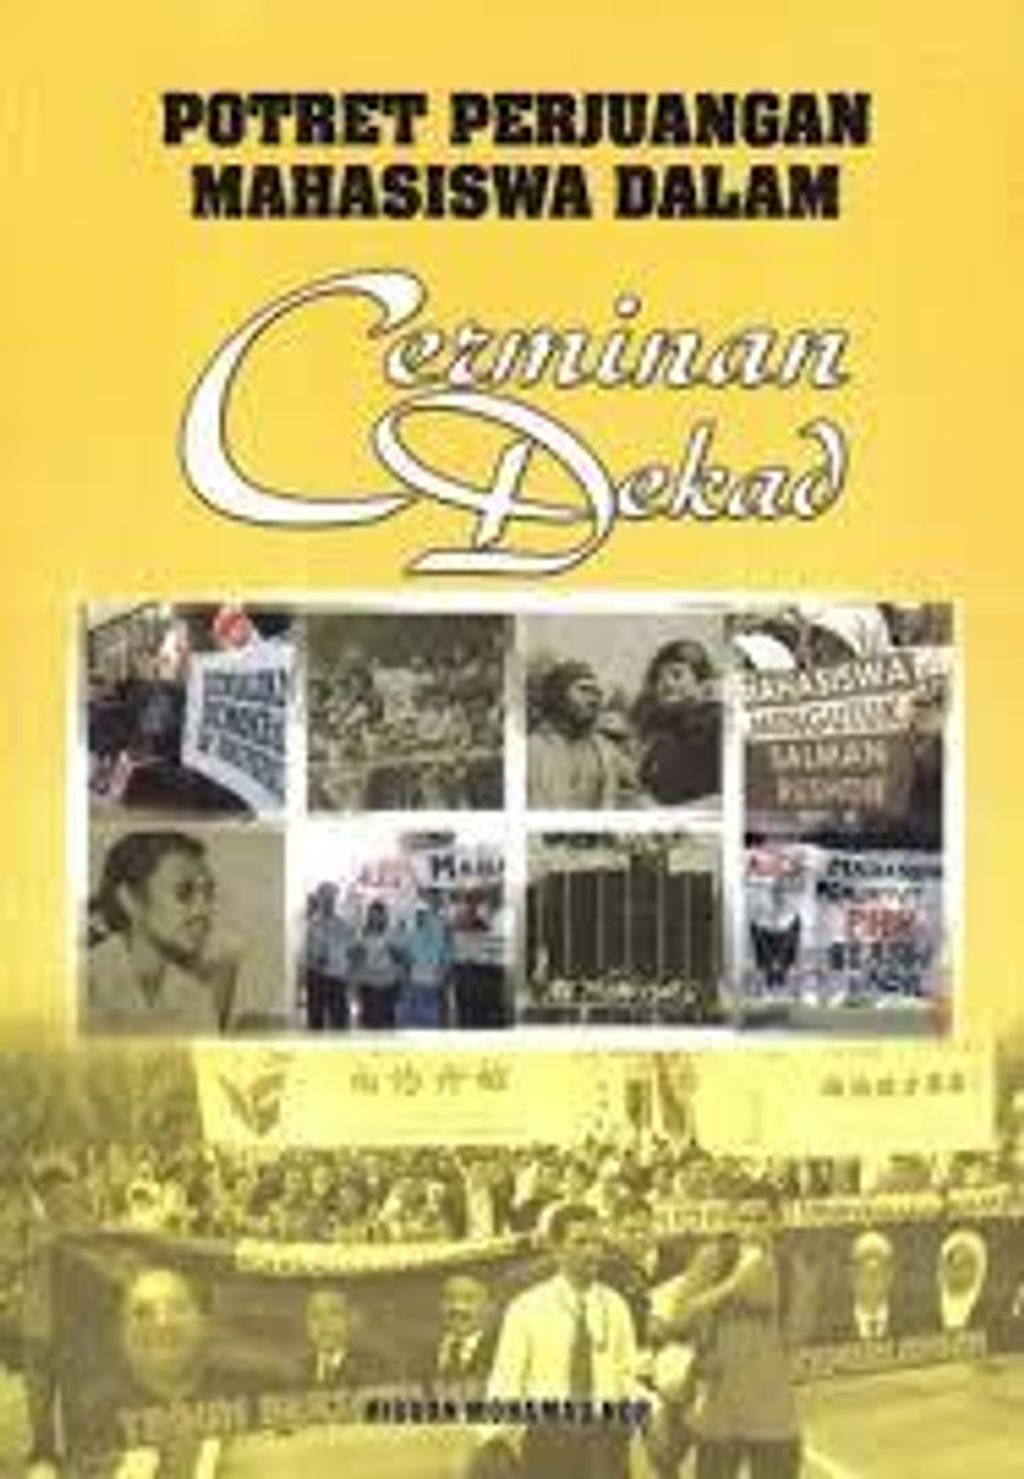 Potret Perjuangan Mahasiswa Dalam Cerminan Dekad - RIduan Mohamad Nor.jpg